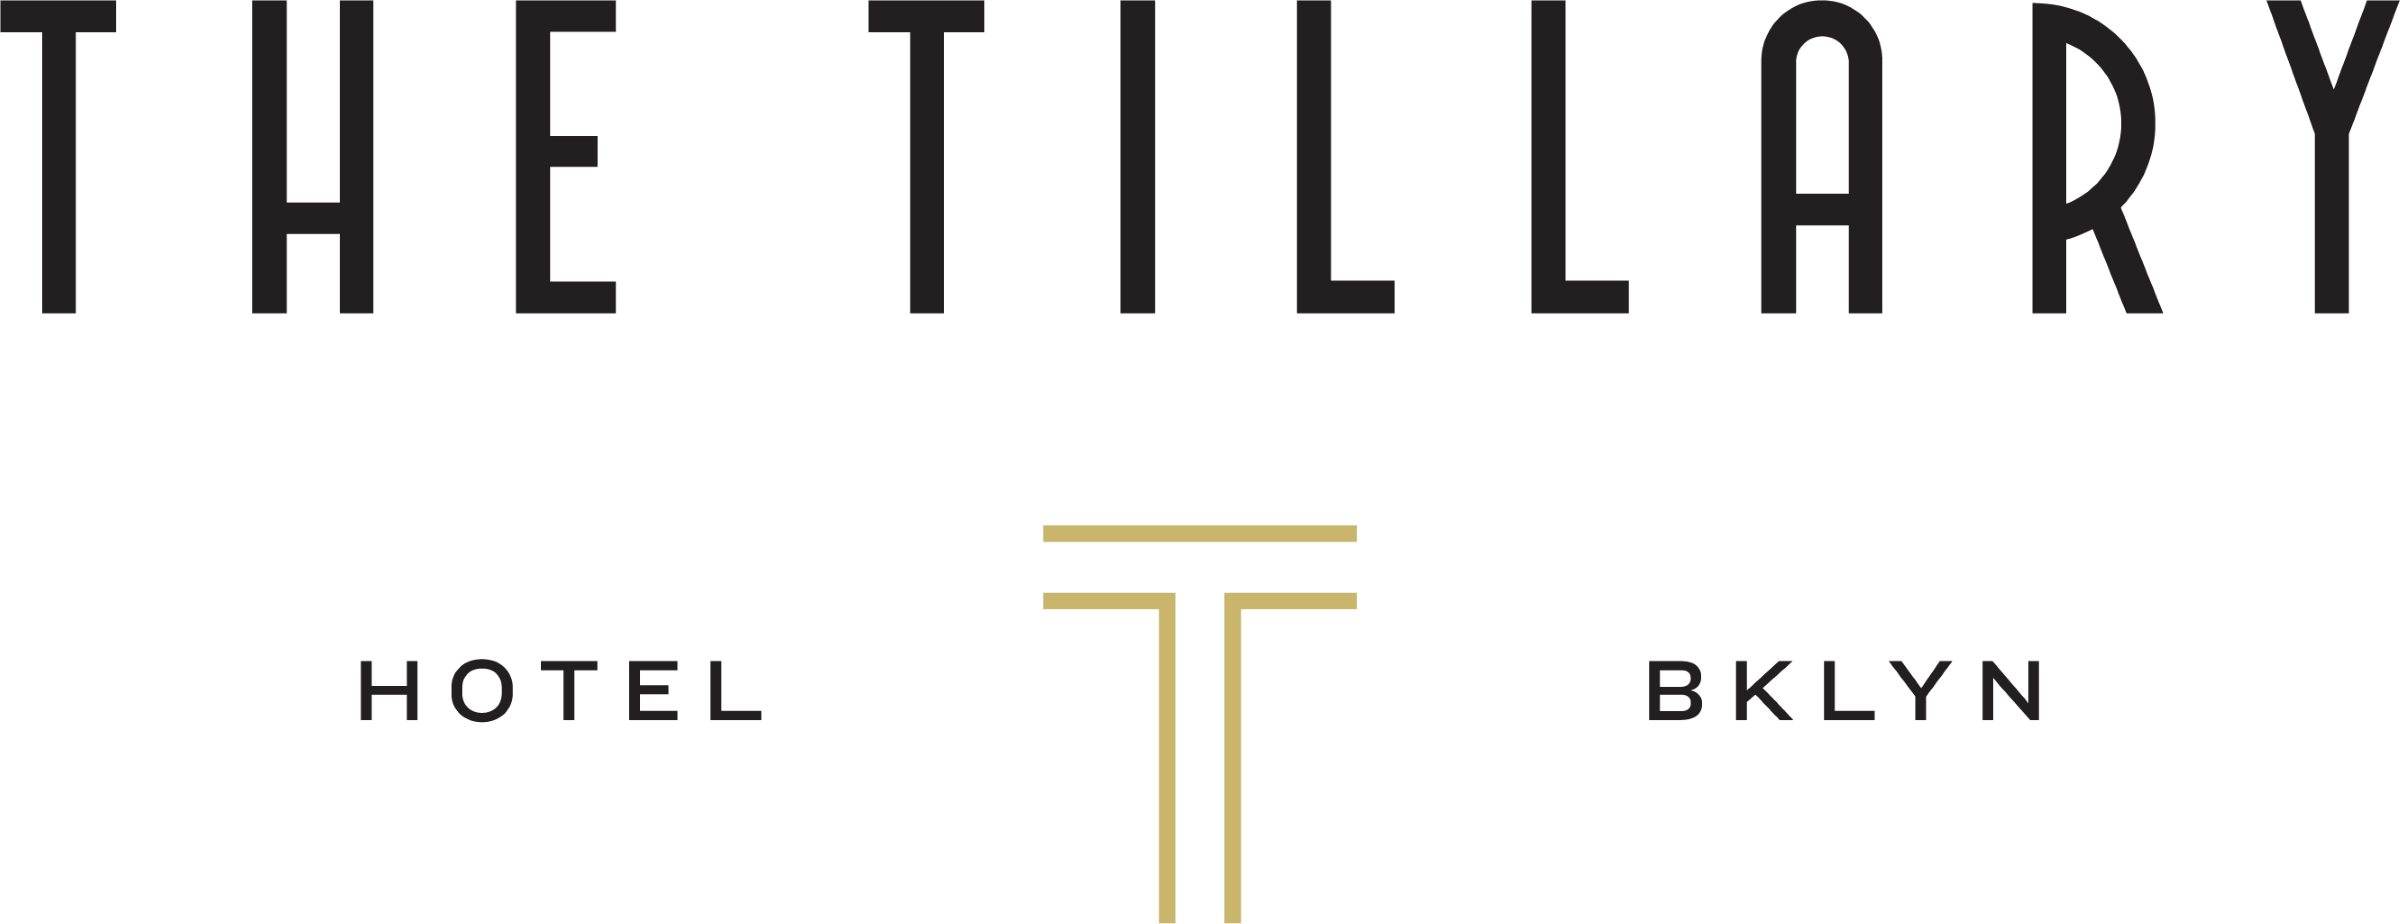 The Tillary Hotel Brooklyn Logo